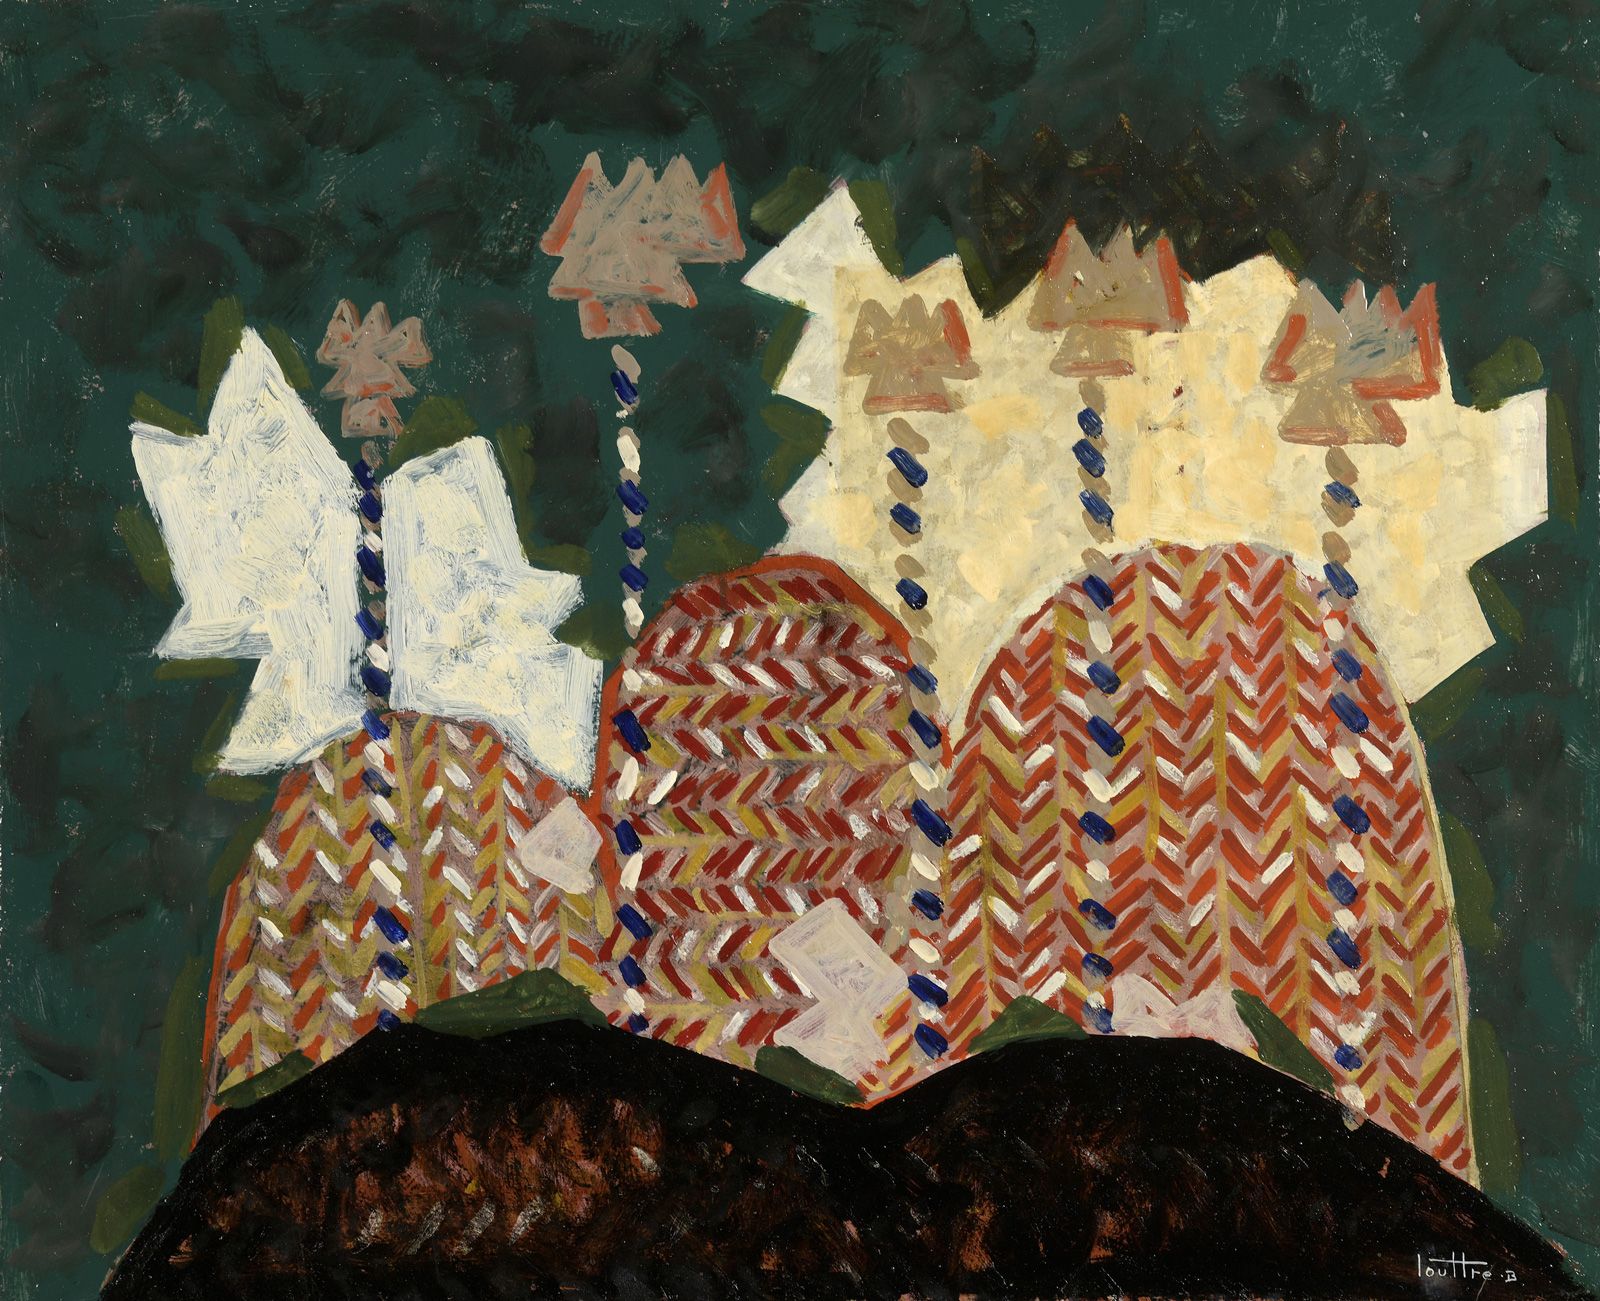 Null 沃尔夫拉姆(1926-2012)

山与花，1974年

布面油画，右下方有签名，背面有题名和日期。

60 x 60厘米

证明：阿姆斯特丹Kuns&hellip;